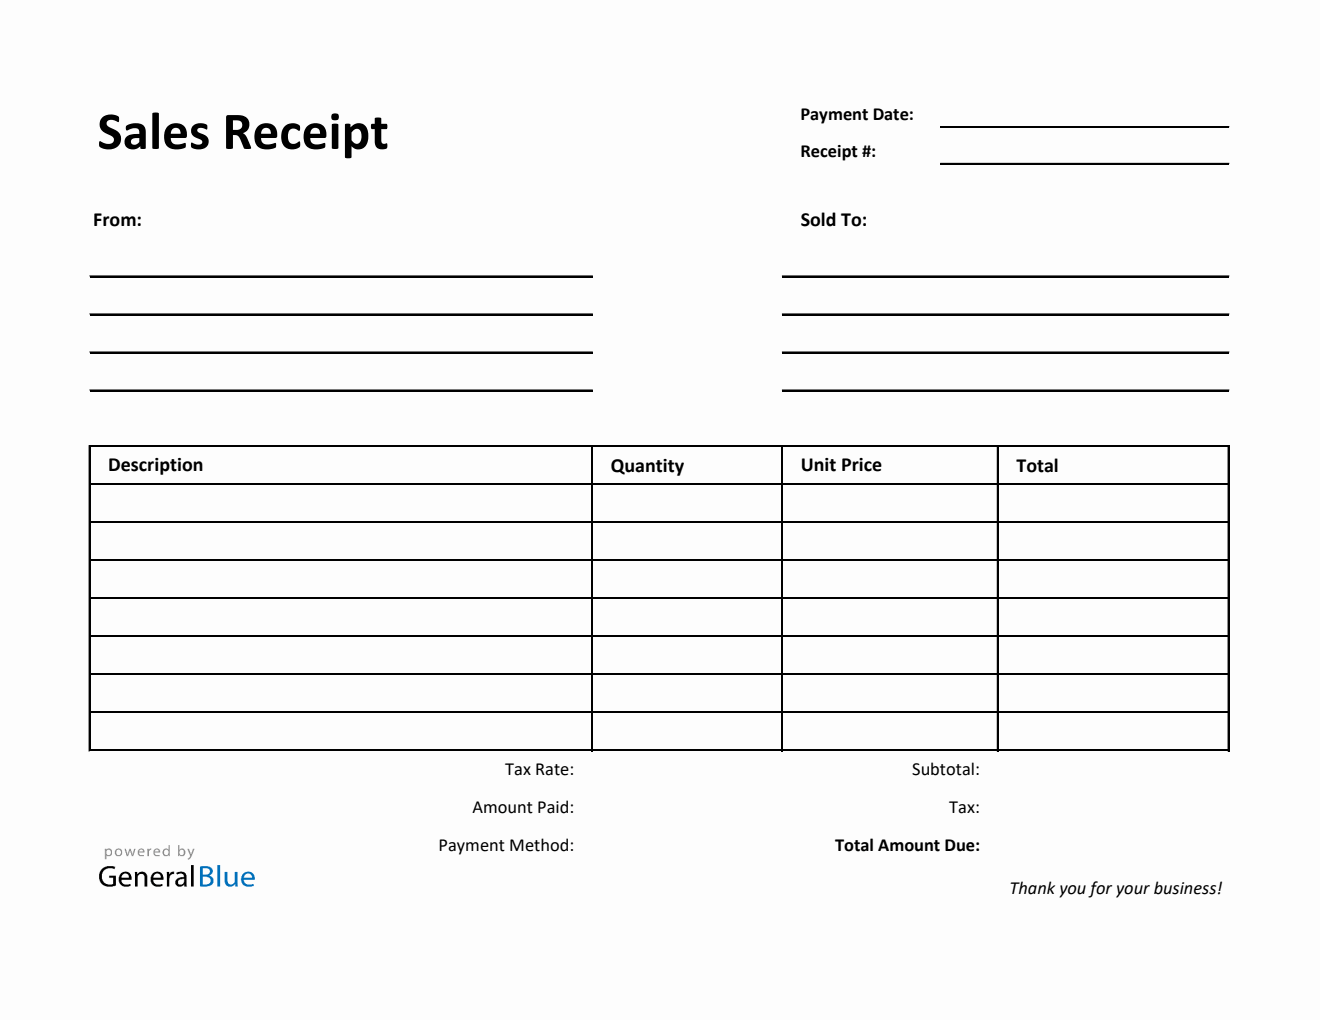 Sales Receipt Template in Excel (Printable)